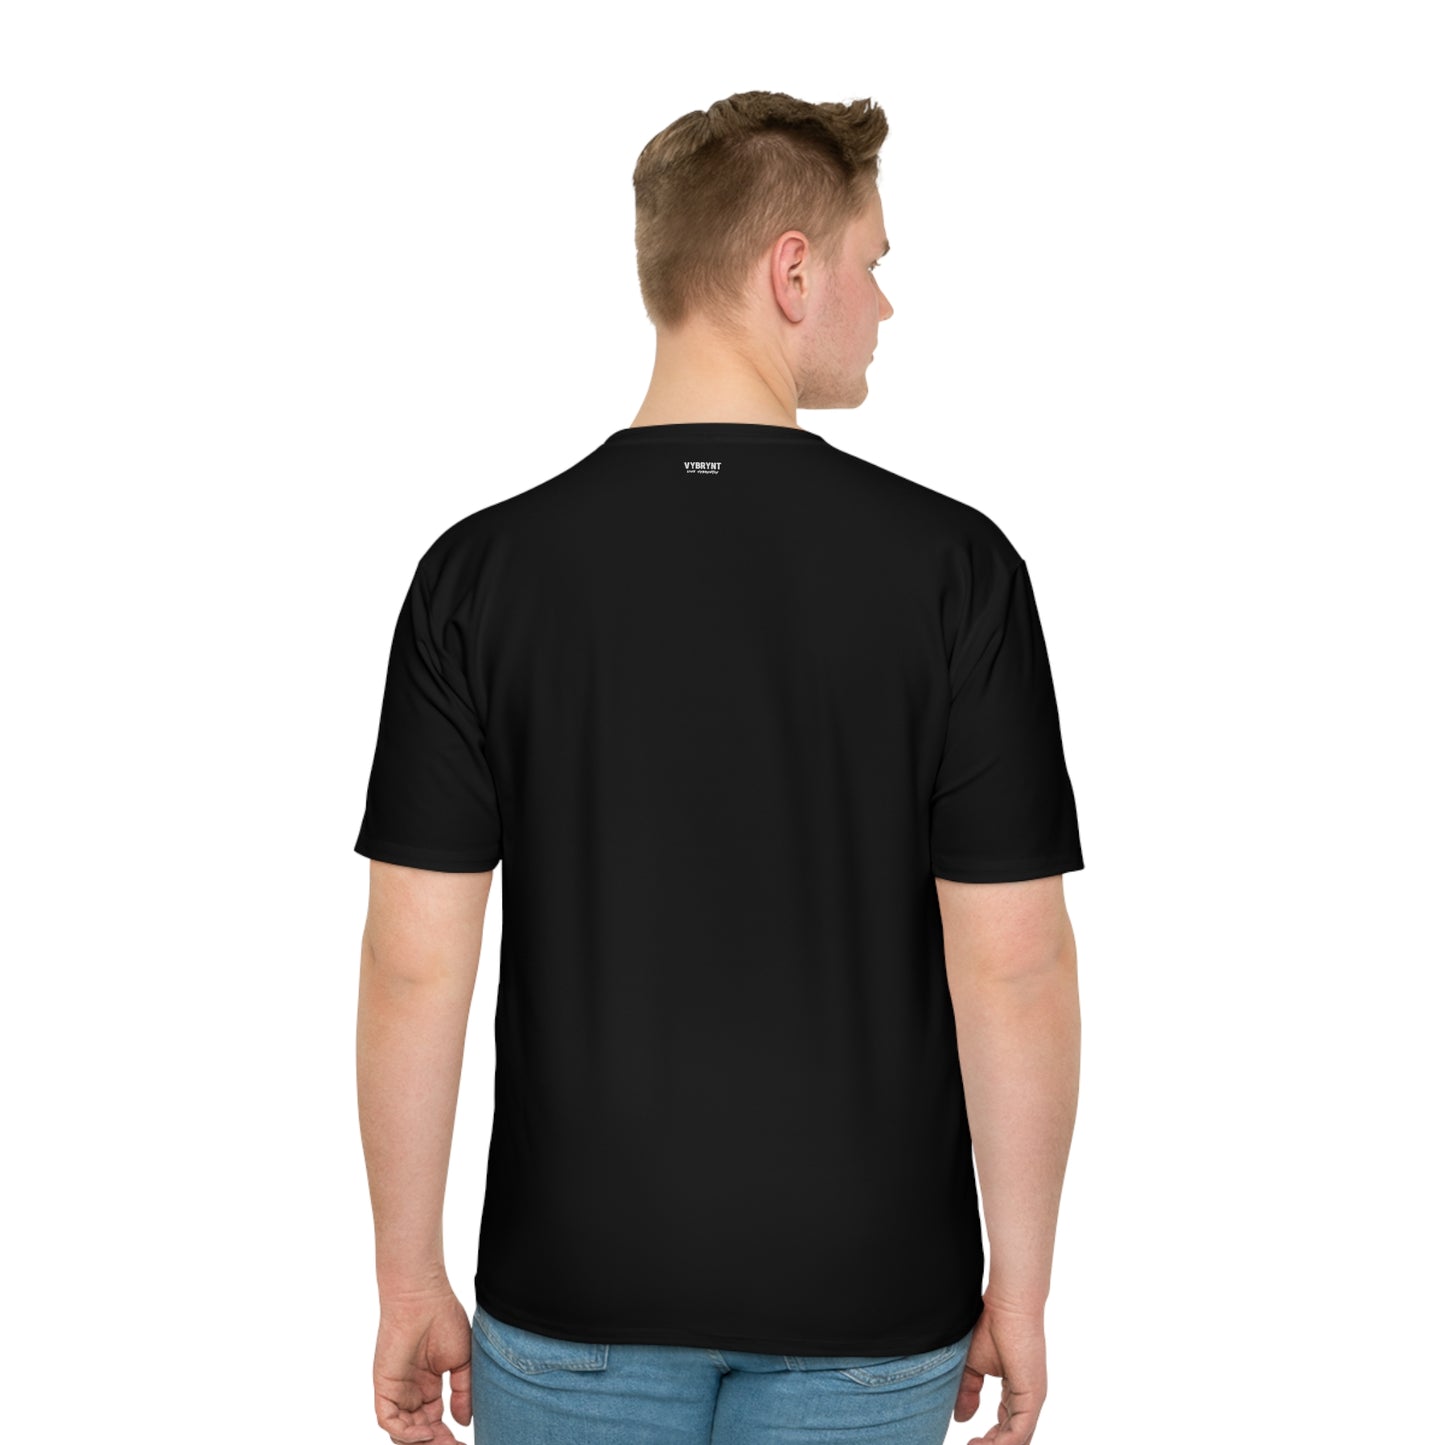 YMCA Men's Black T-shirt